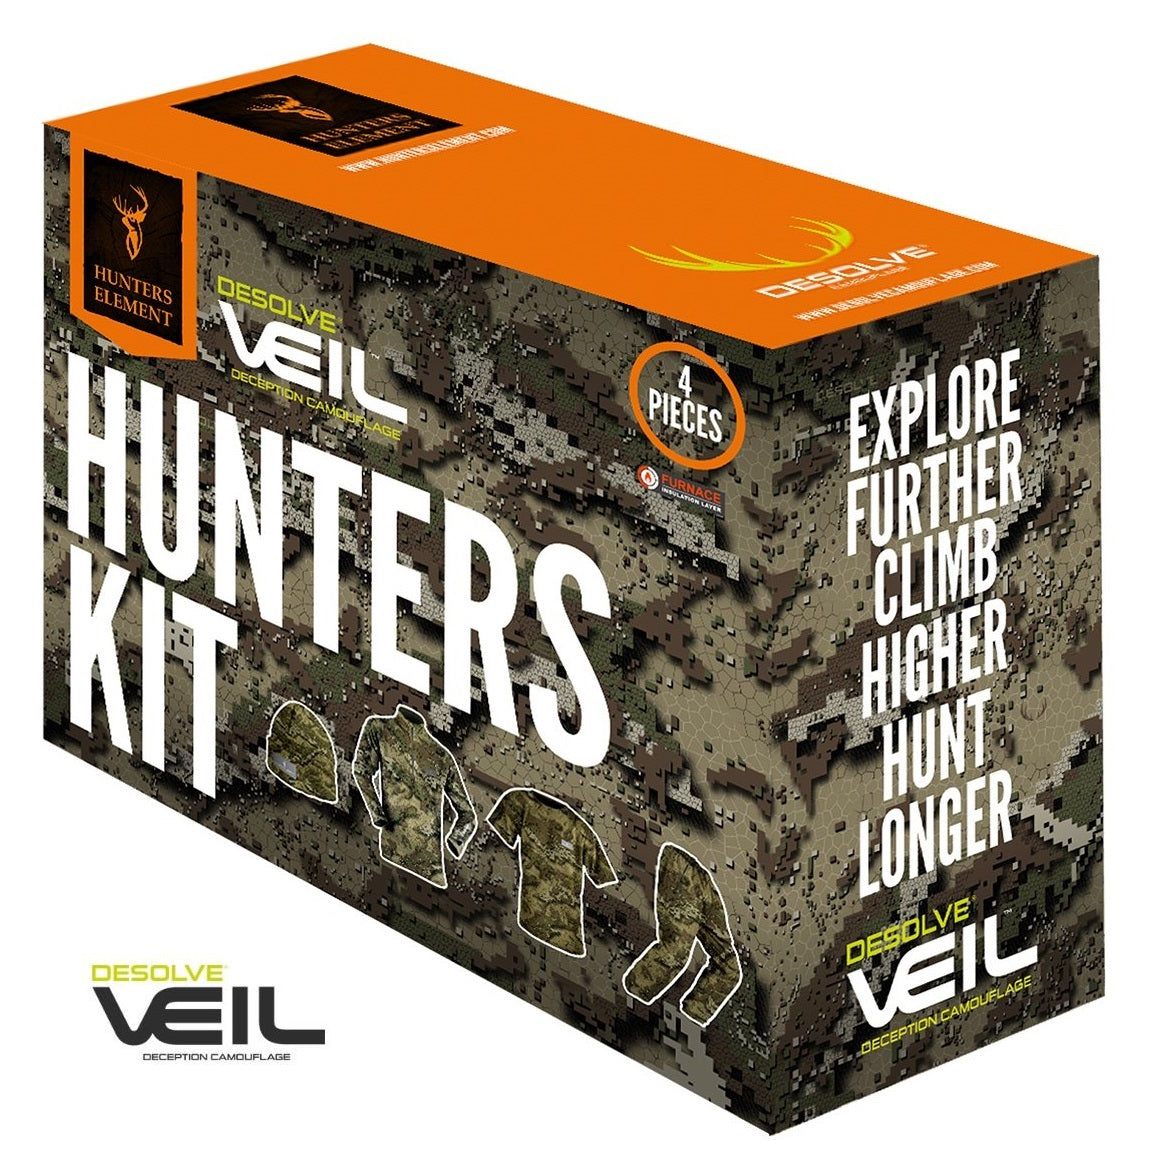 Hunters Element Concealed Hunters Kit Veil Deception Camouflage